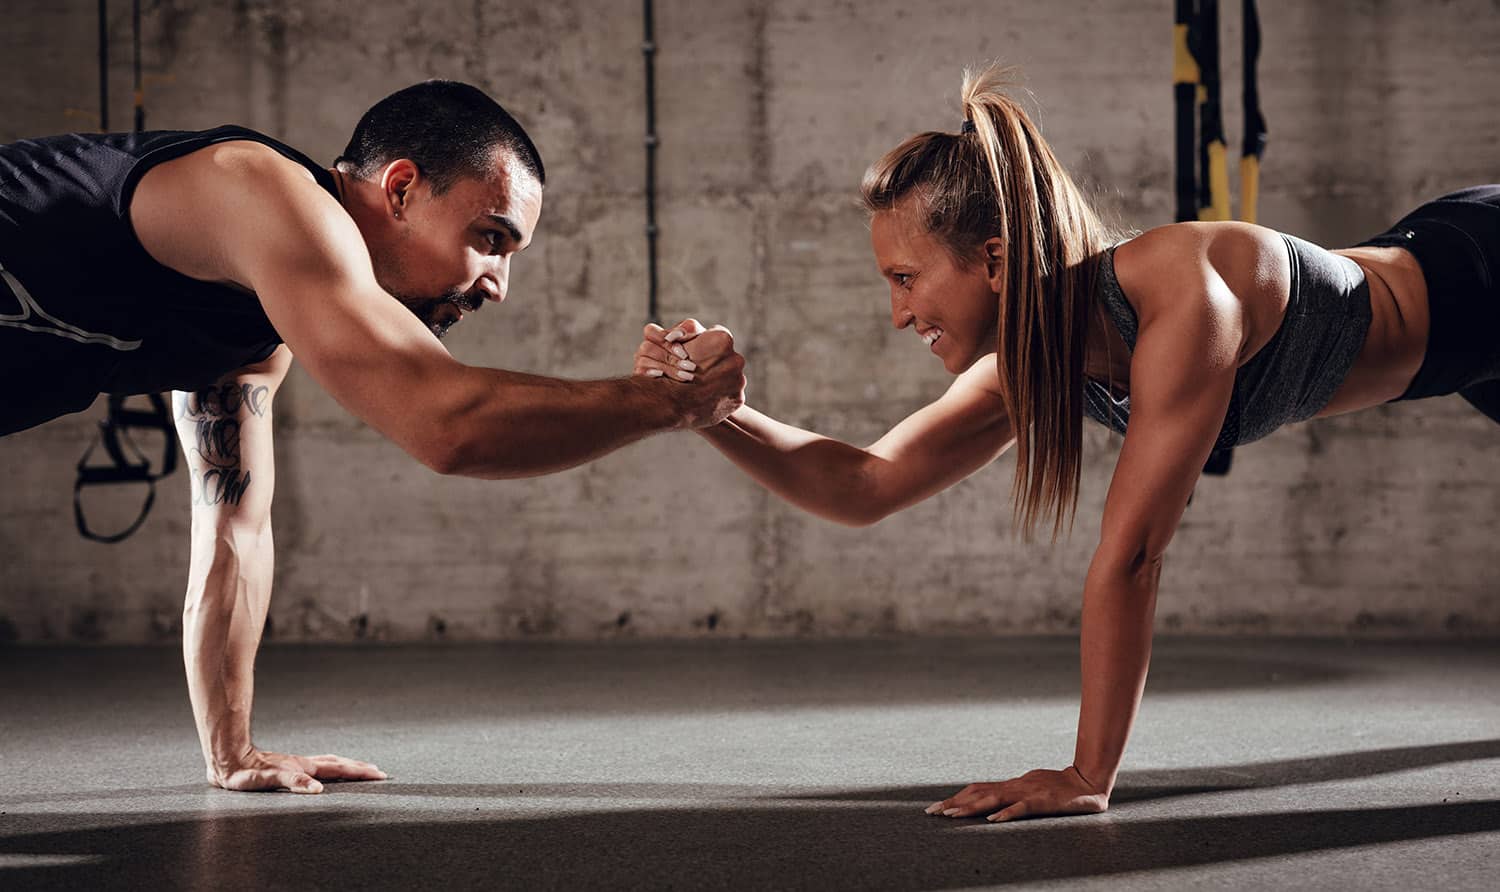 Gym Partner Motivating each other